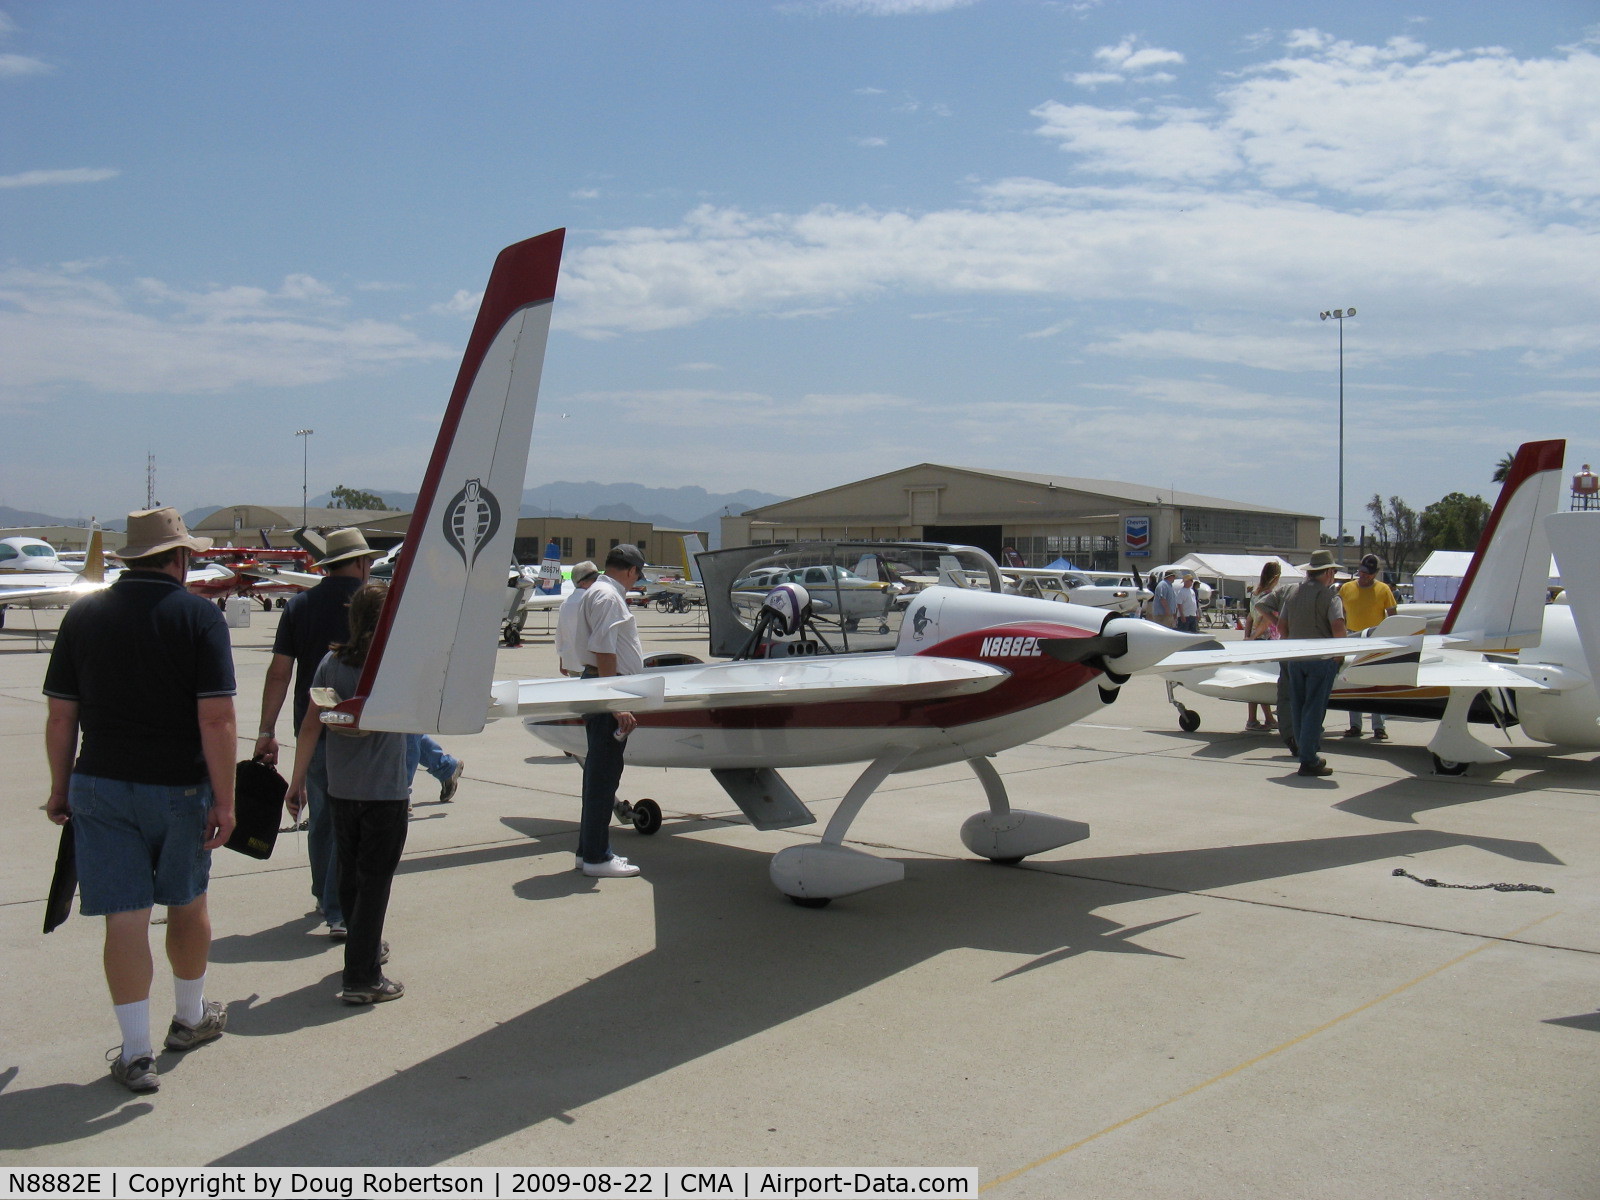 N8882E, 2008 Rutan Long-EZ C/N 001 (N8882E), 2008 Randall RED DEVIL canard , Lycoming O-320-E2D 150 Hp, pusher prop